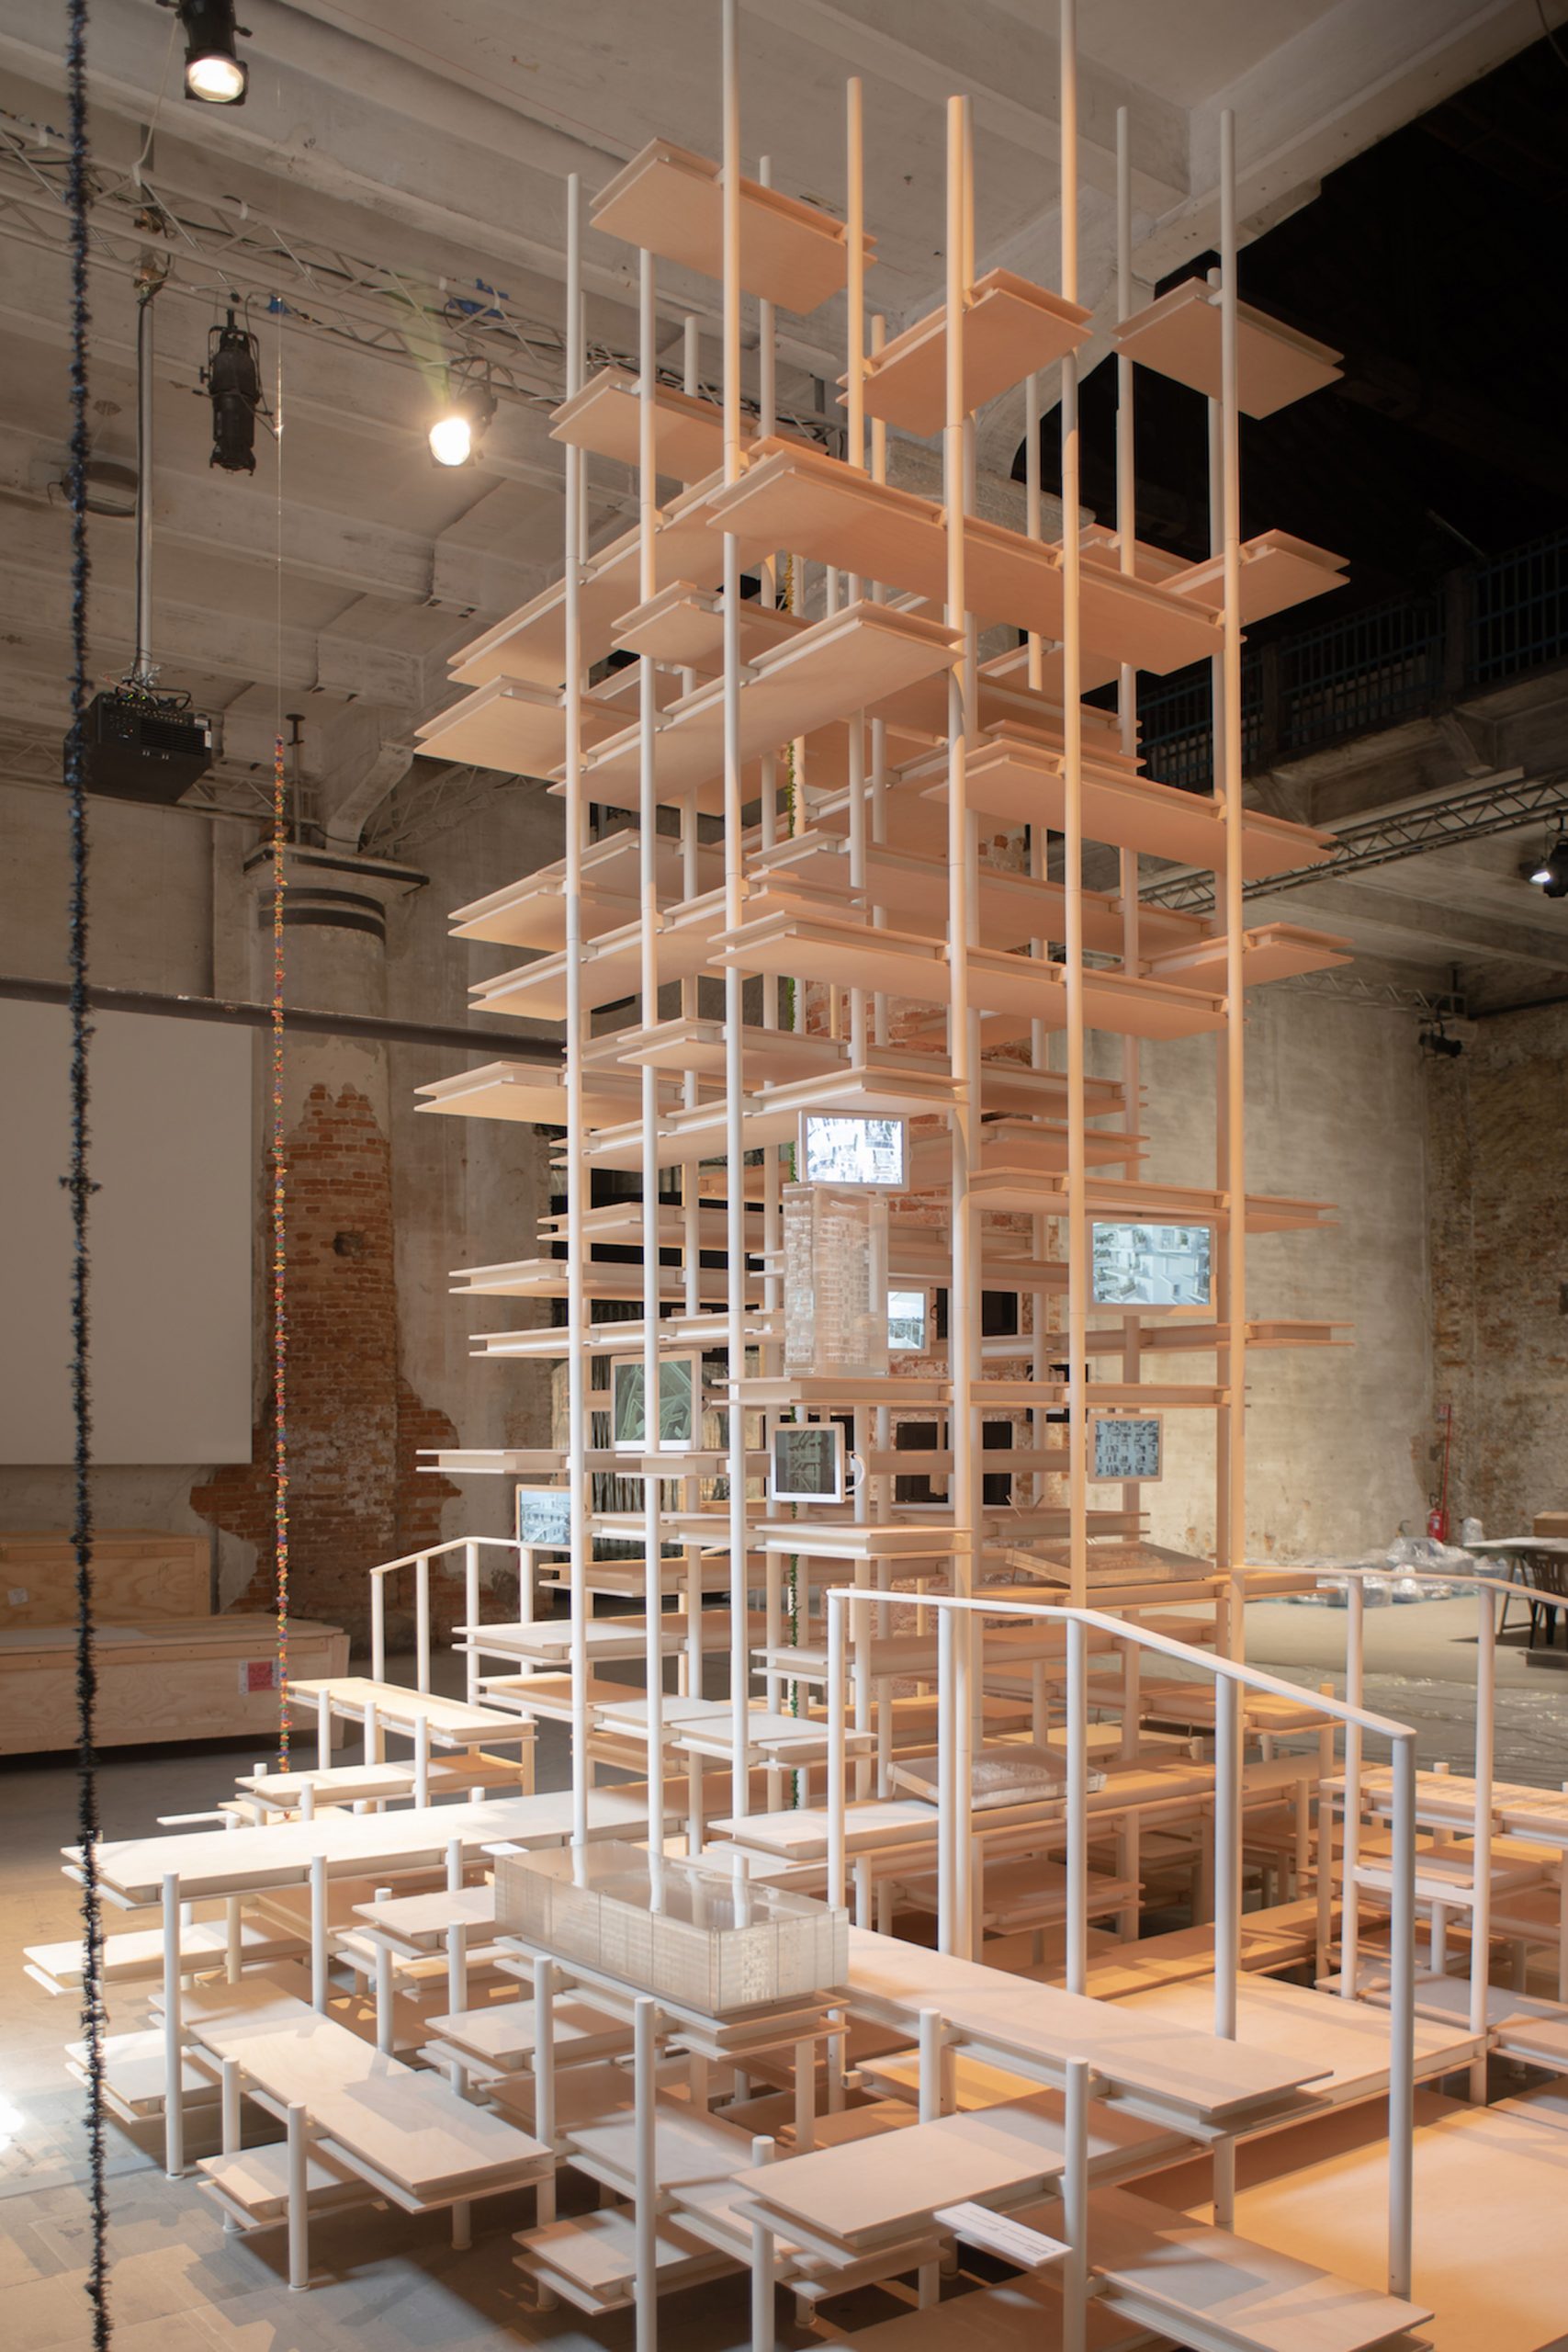 One Open Tower by Nicolas Laisnè at Venice Architecture Biennale